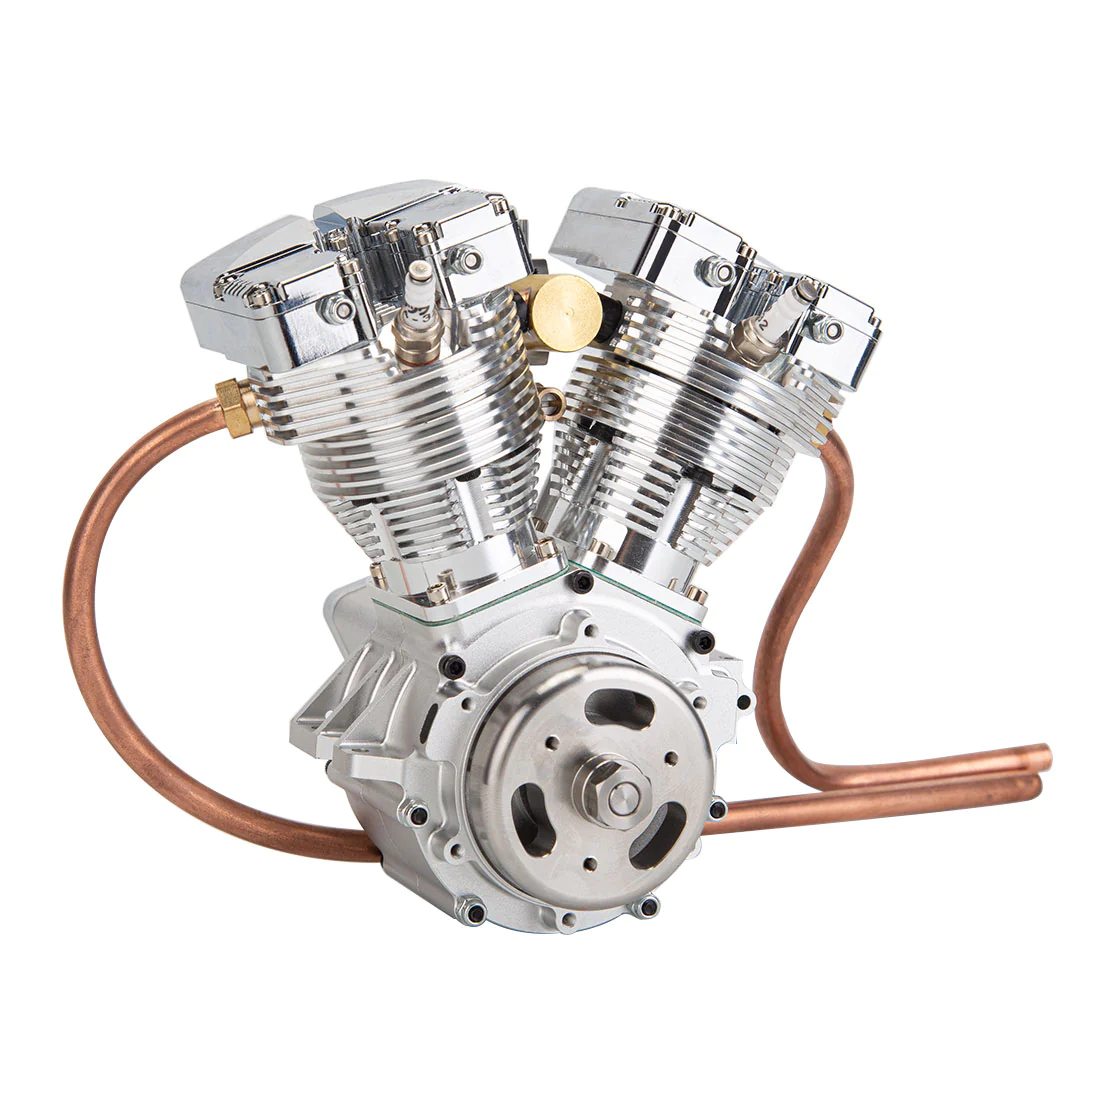 CISON FG-VT157 15.7cc Miniature V-Twin Motorcycle Engine OHV 4 Stroke Air-cooled Gasoline Engine Model 2